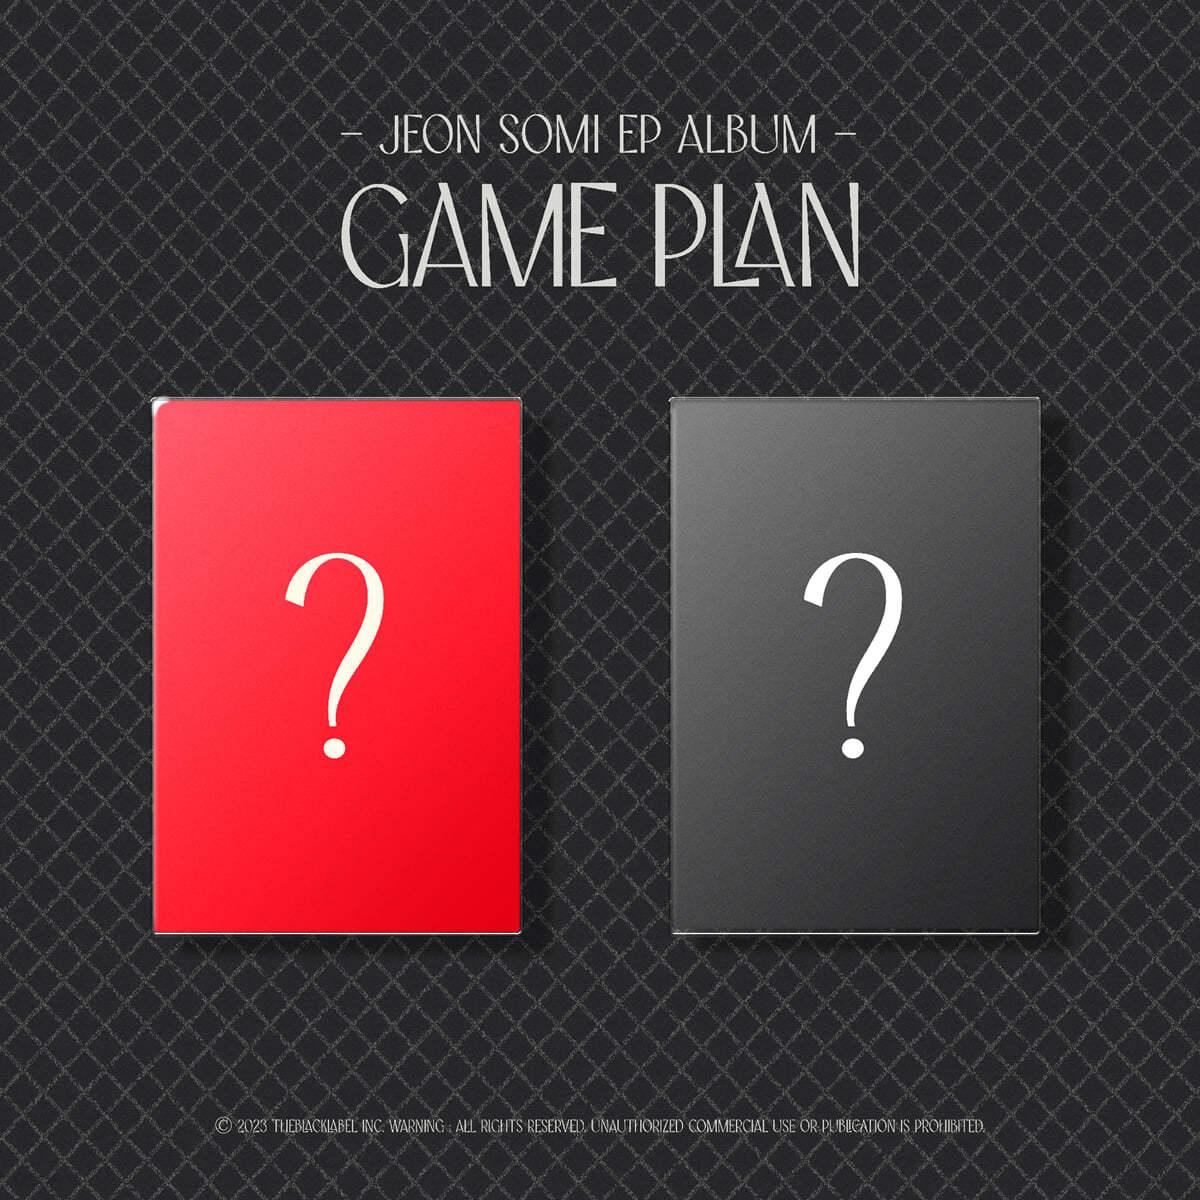 JEON SOMI EP ALBUM - GAME PLAN (NEMO ALBUM Ver.) (Random) - KKANG